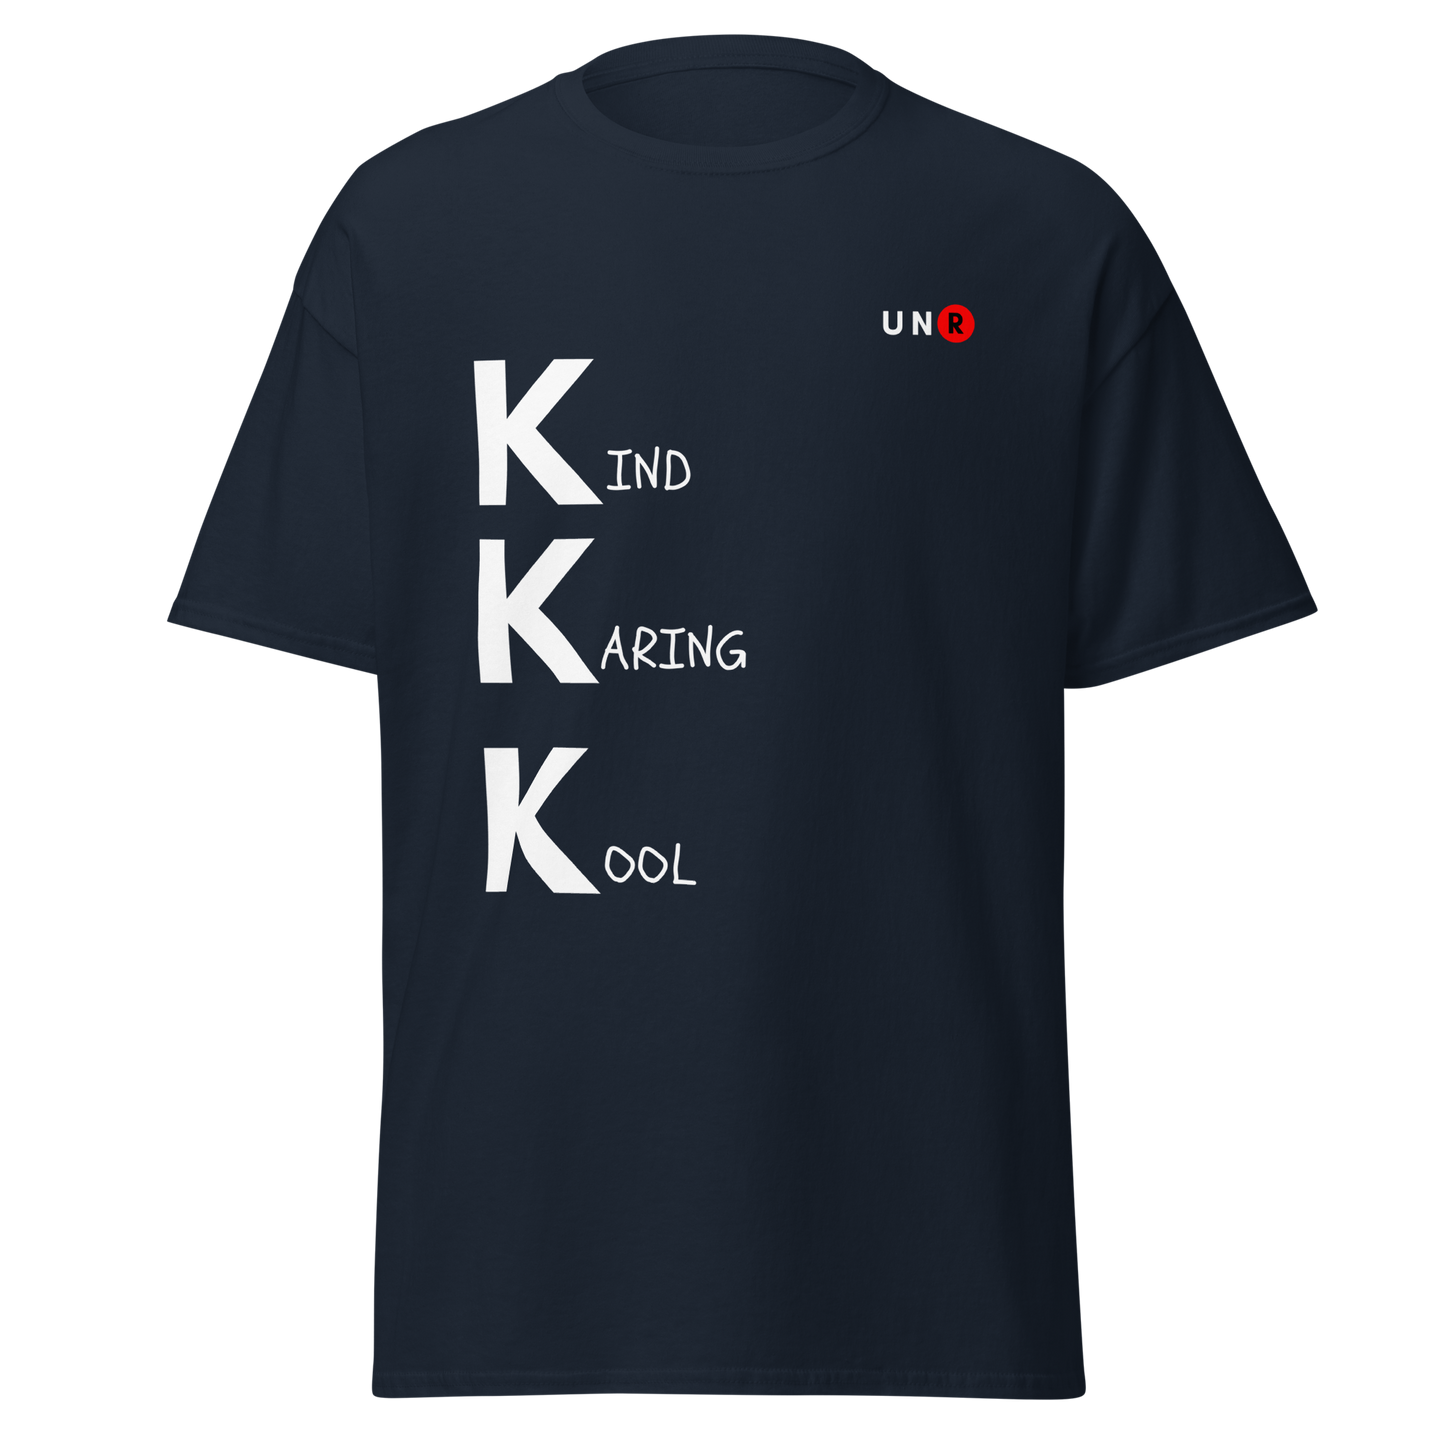 Kind, Karing, Kool T-shirt